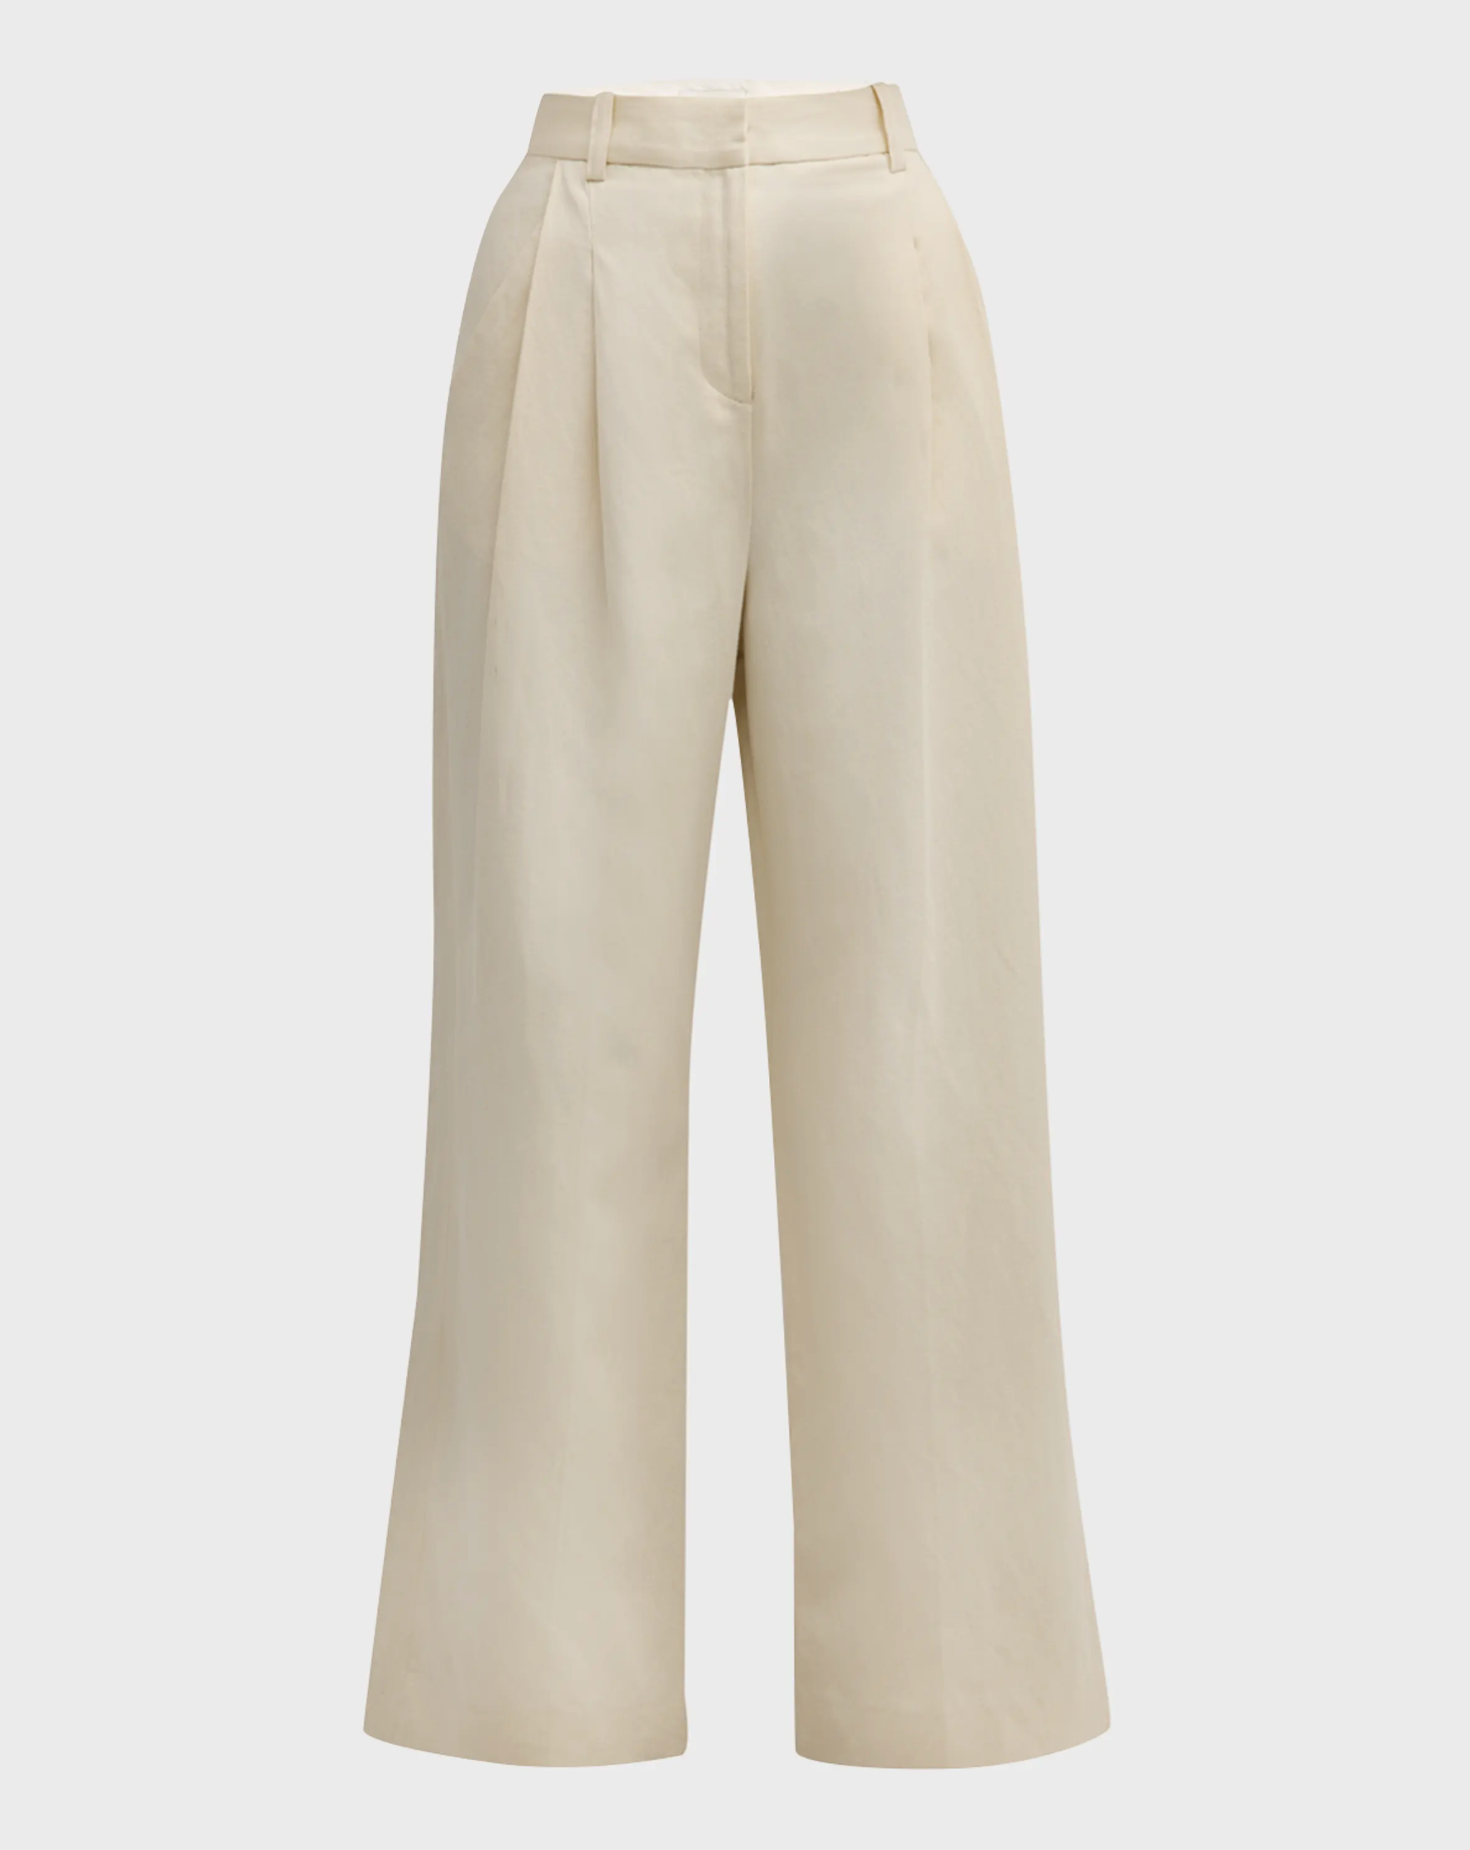 Idai Cotton & Linen Pants